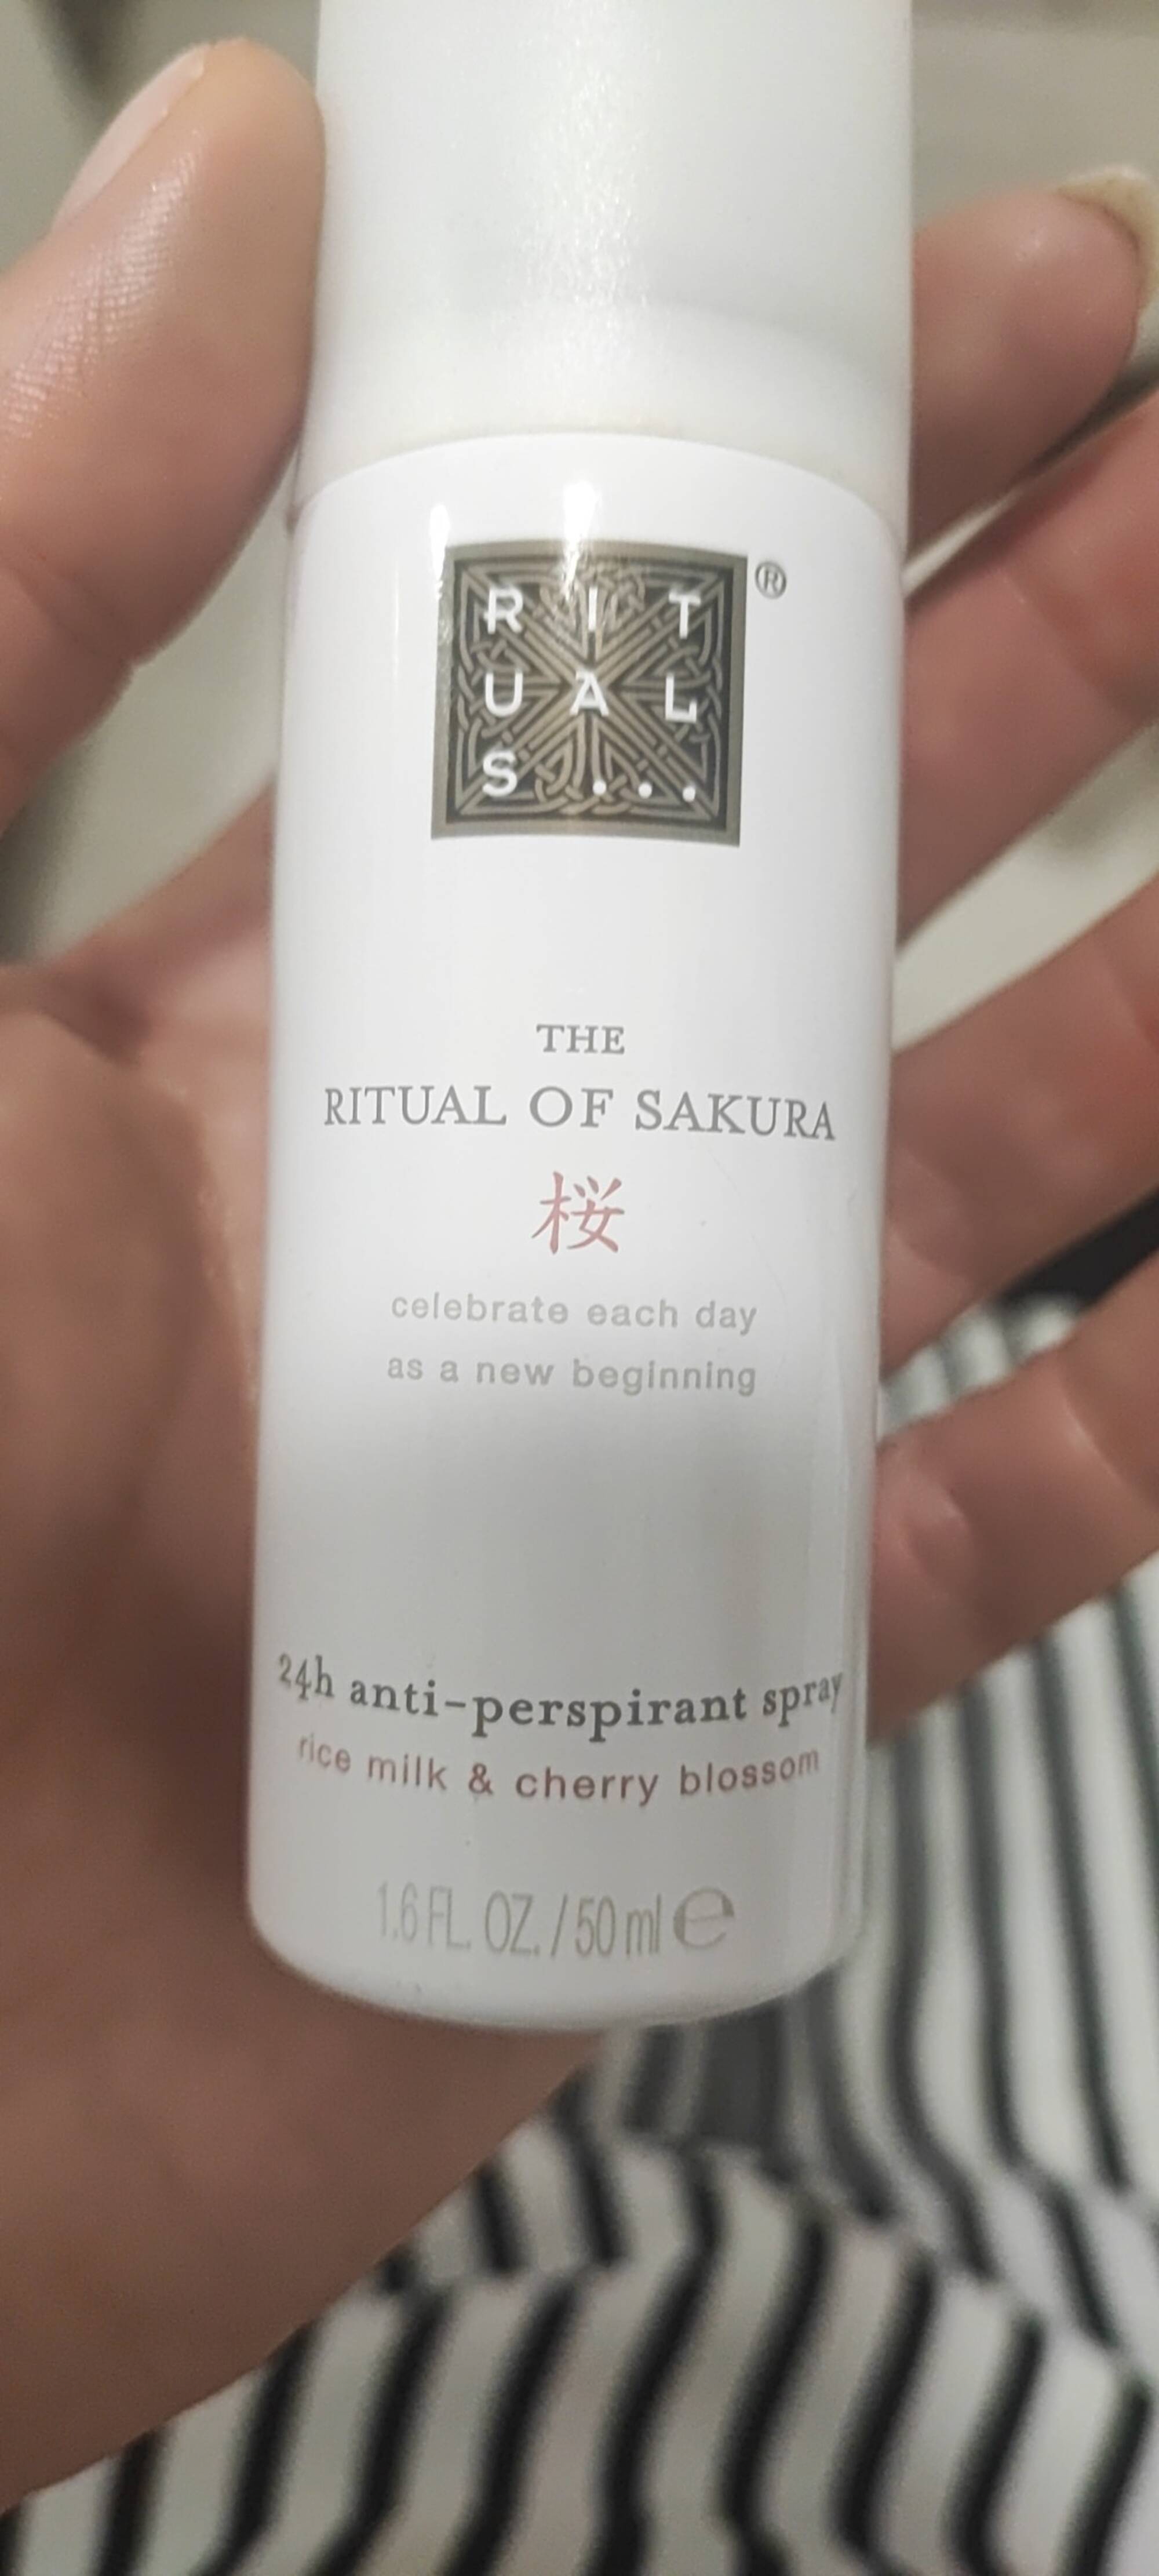 RITUALS - The ritual of sakura - Anti-perspirant spray 24h